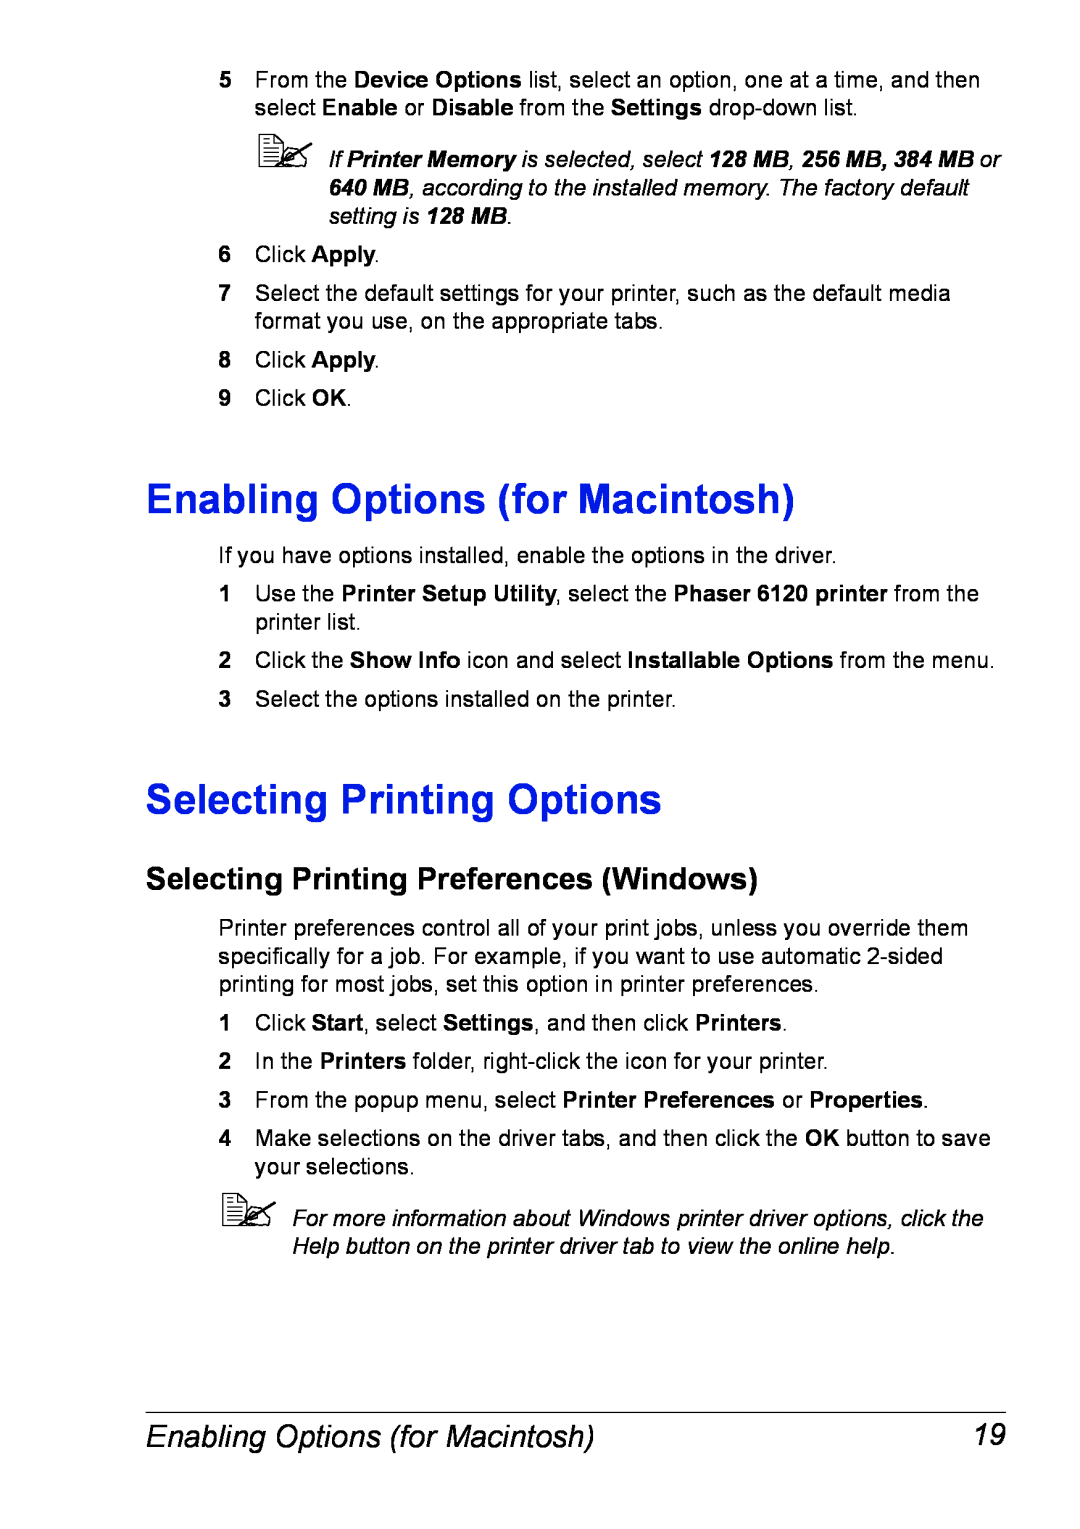 Xerox 6120 manual Enabling Options for Macintosh, Selecting Printing Options, Selecting Printing Preferences Windows 